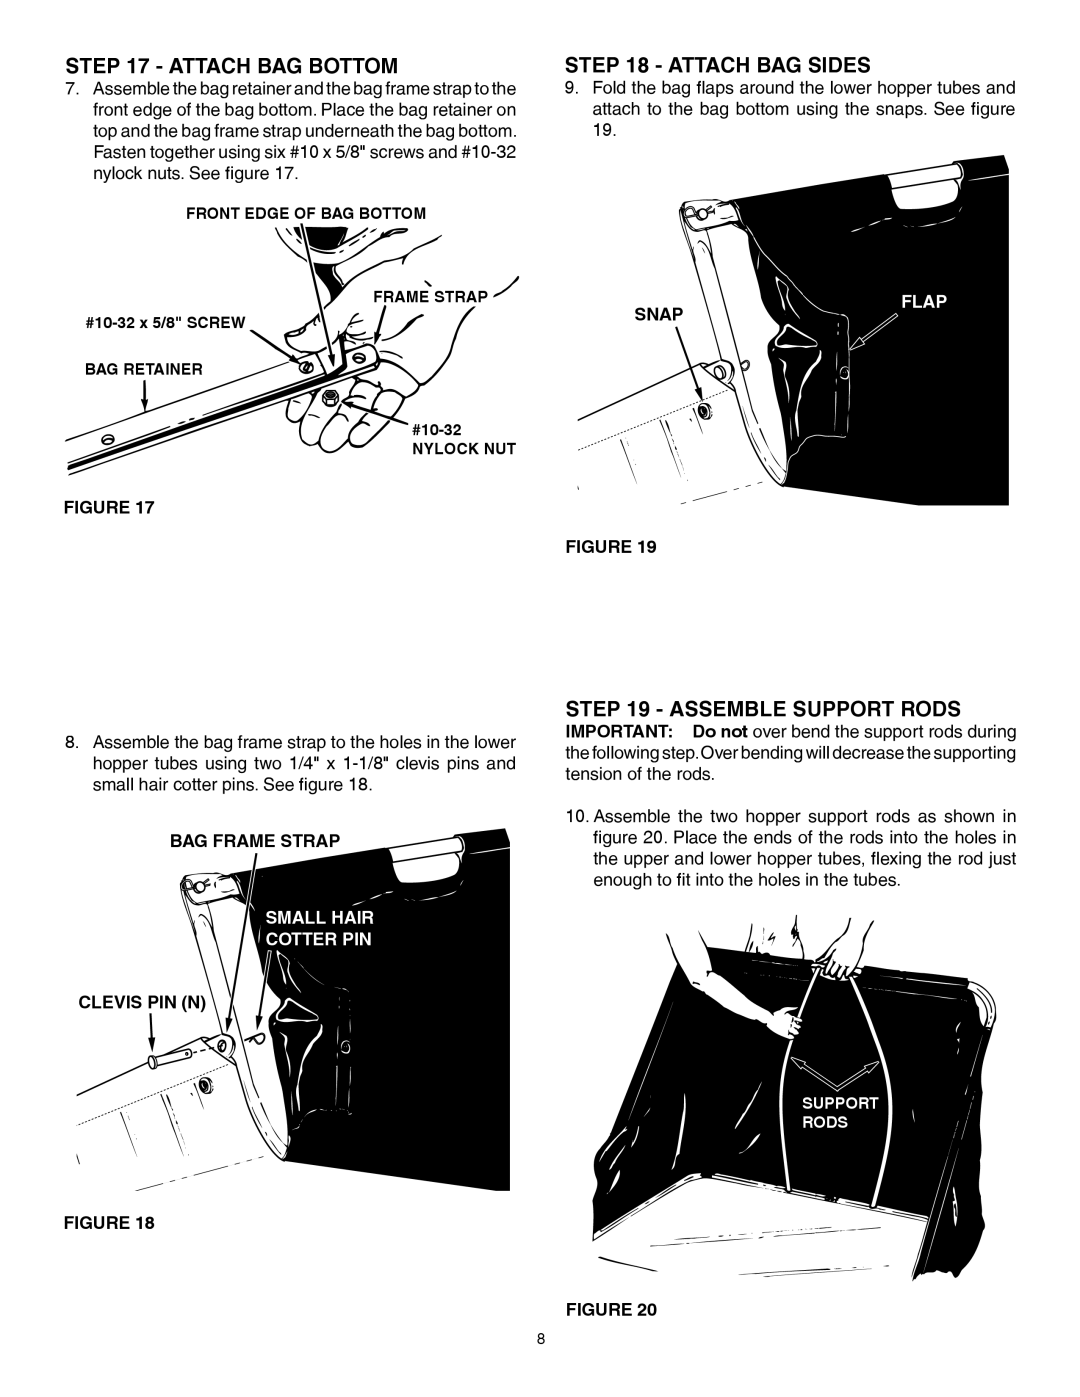 Husqvarna 45-0352 Attach Bag Bottom, Attach Bag Sides, Assemble Support Rods, Snap, Bag Frame Strap, Clevis Pin N, Flap 